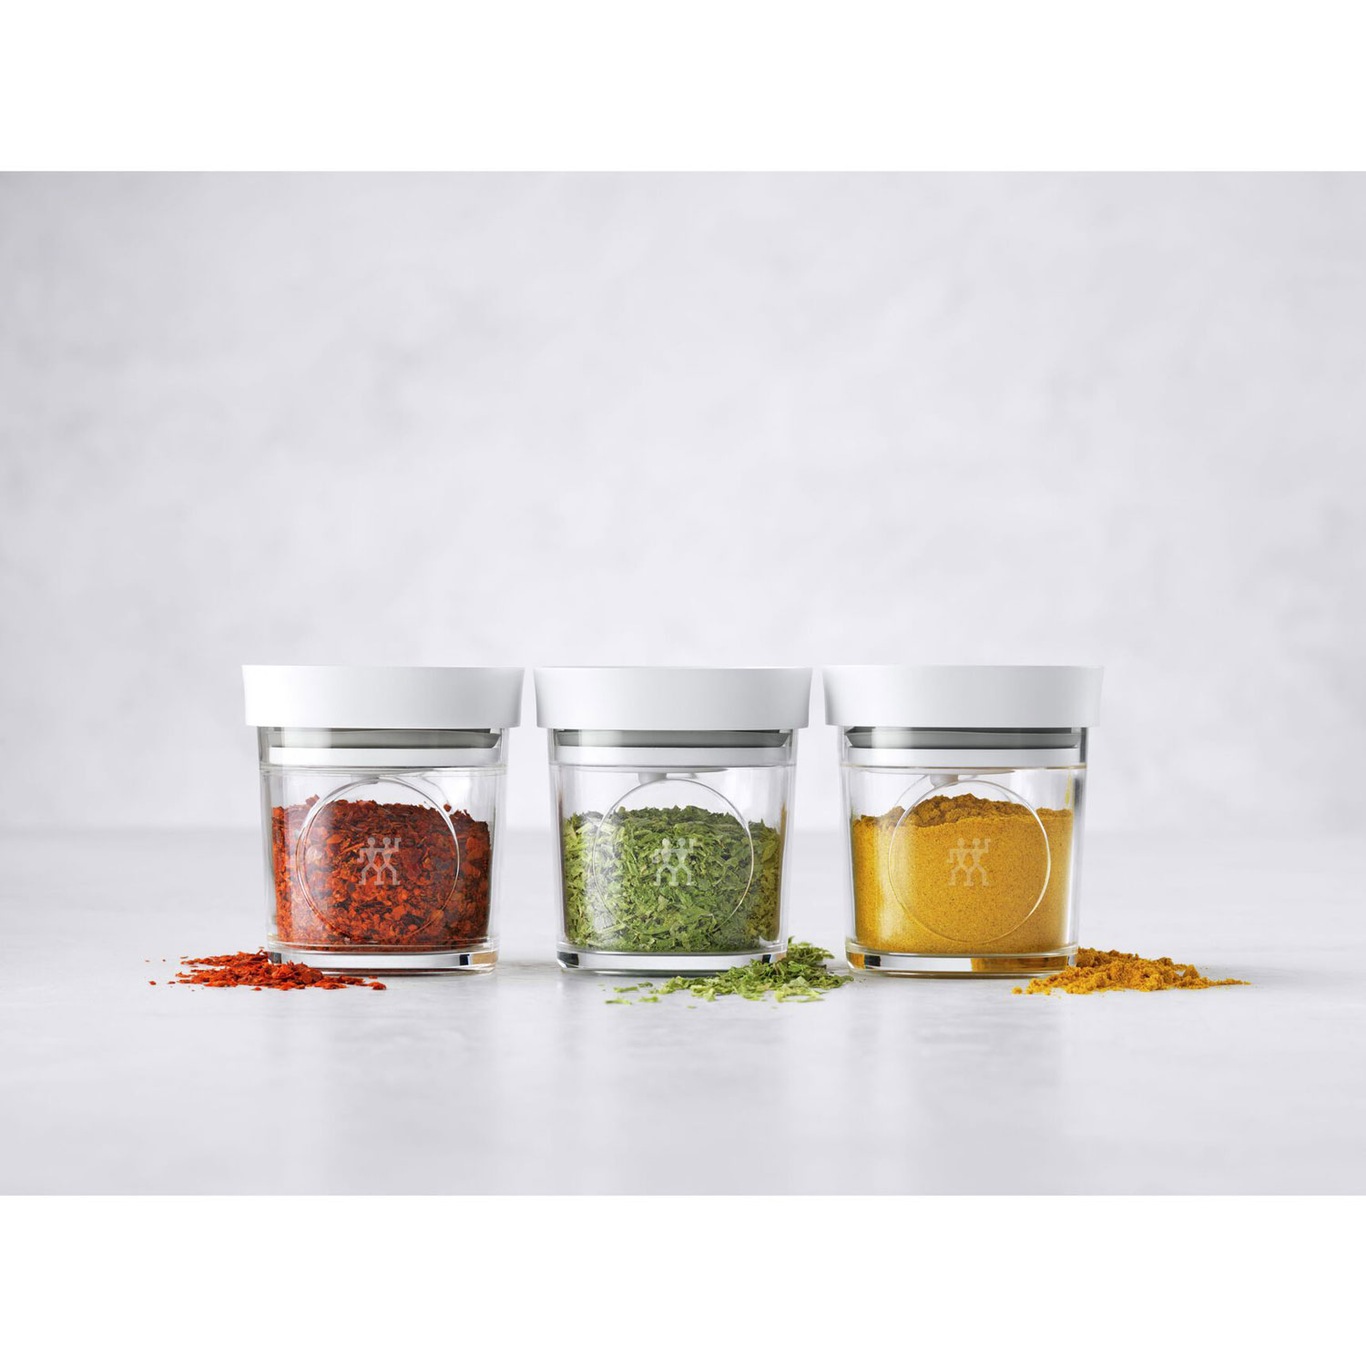 https://royaldesign.com/image/2/zwilling-fresh-save-spice-jar-3-pack-1?w=800&quality=80